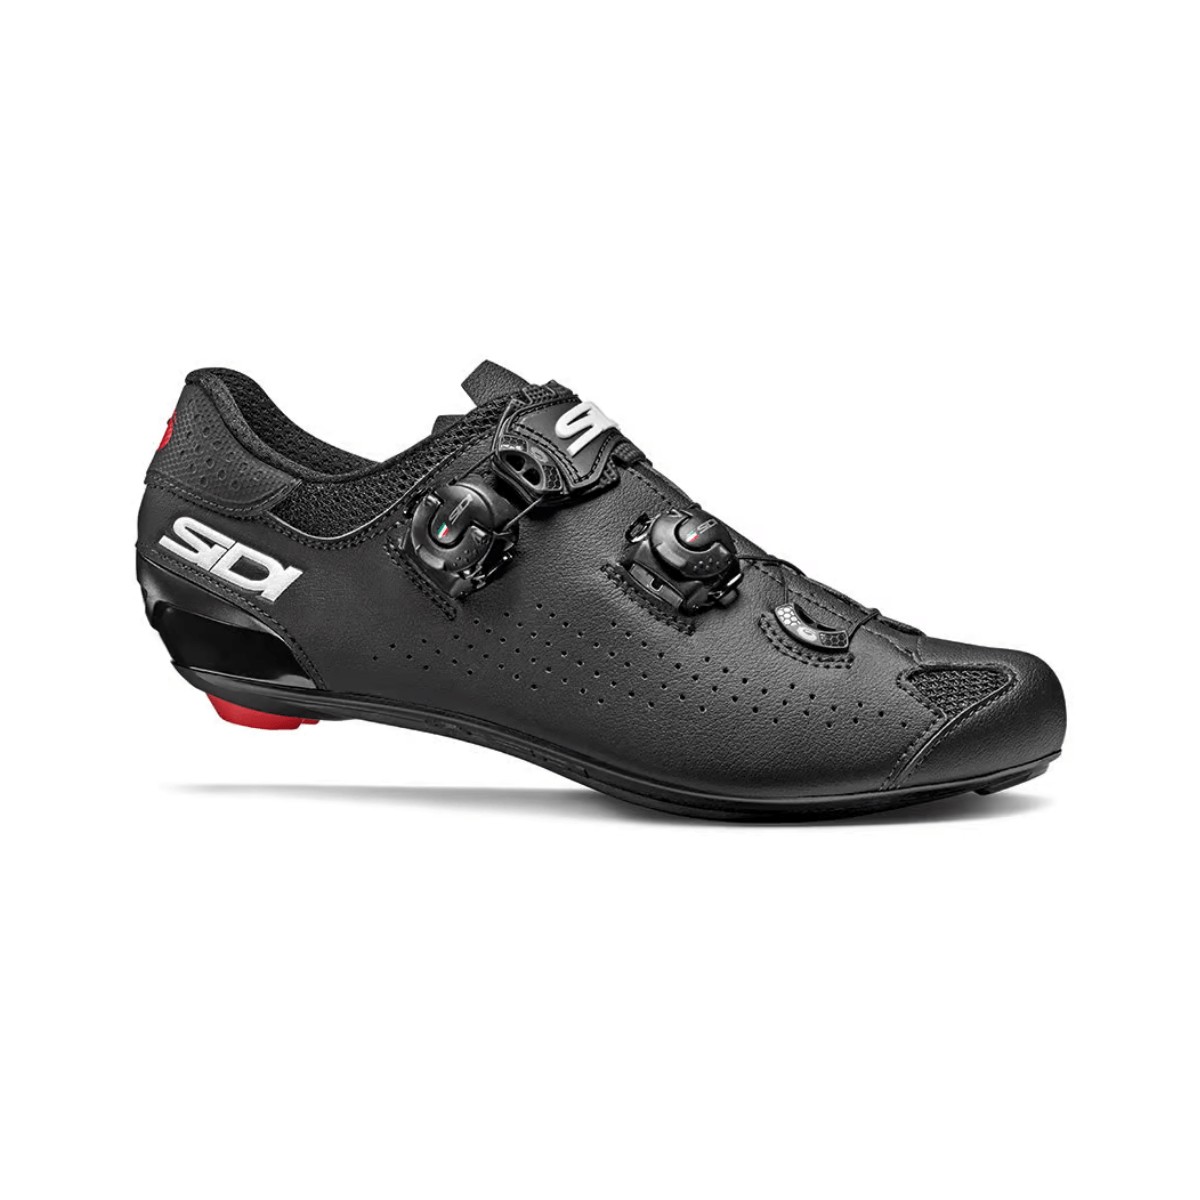 Sidi Genius 10 Cycling Shoes Black, Size 41 - EUR